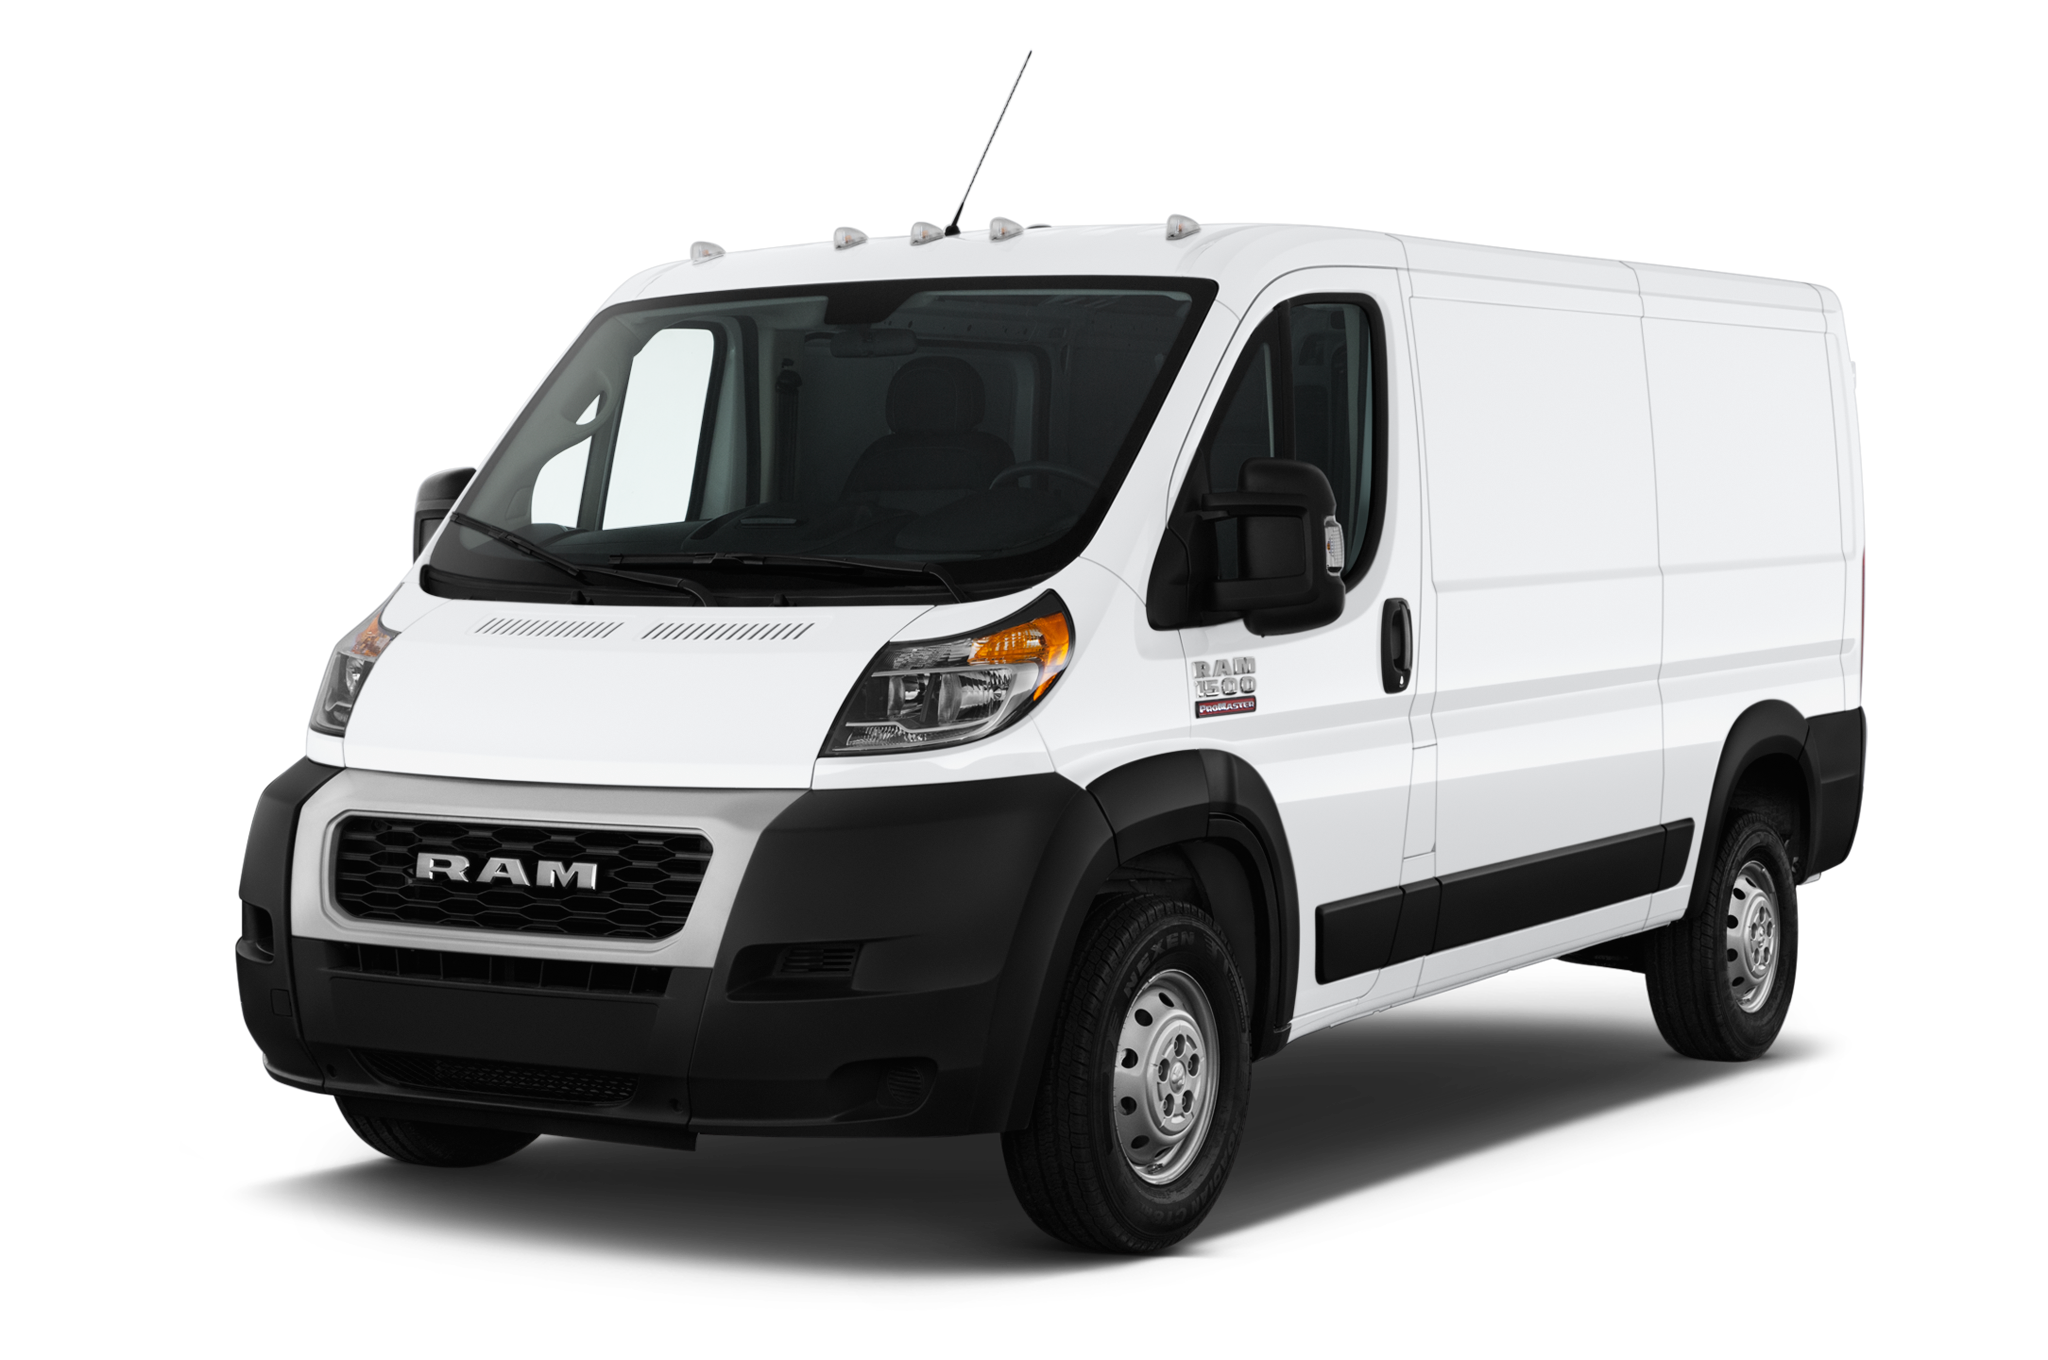 2019 Ram ProMaster Cargo Van Reviews - MSN Autos